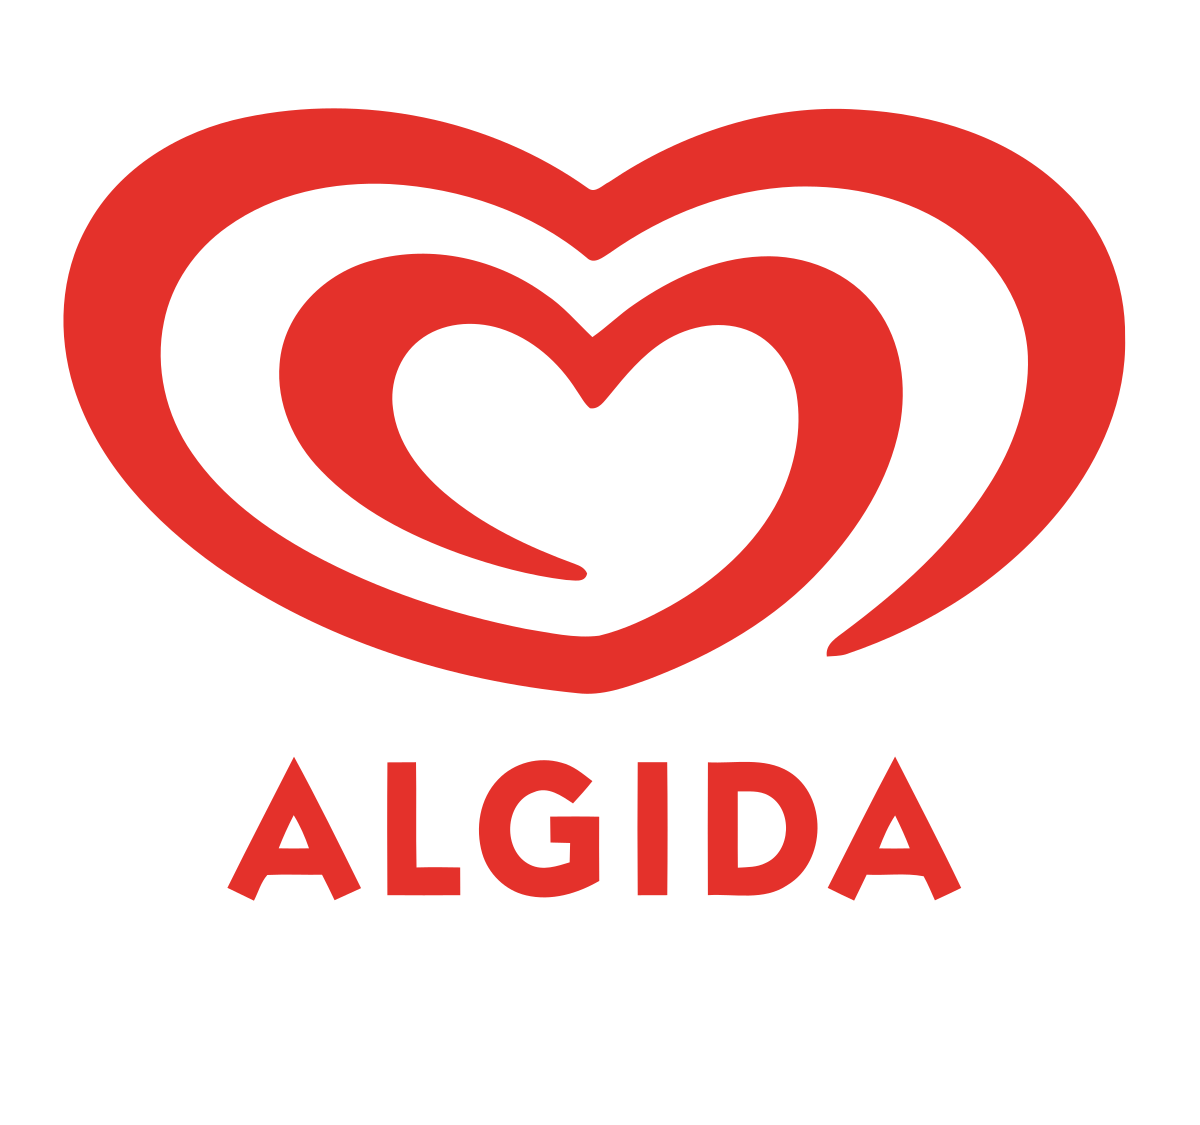 Algida logo